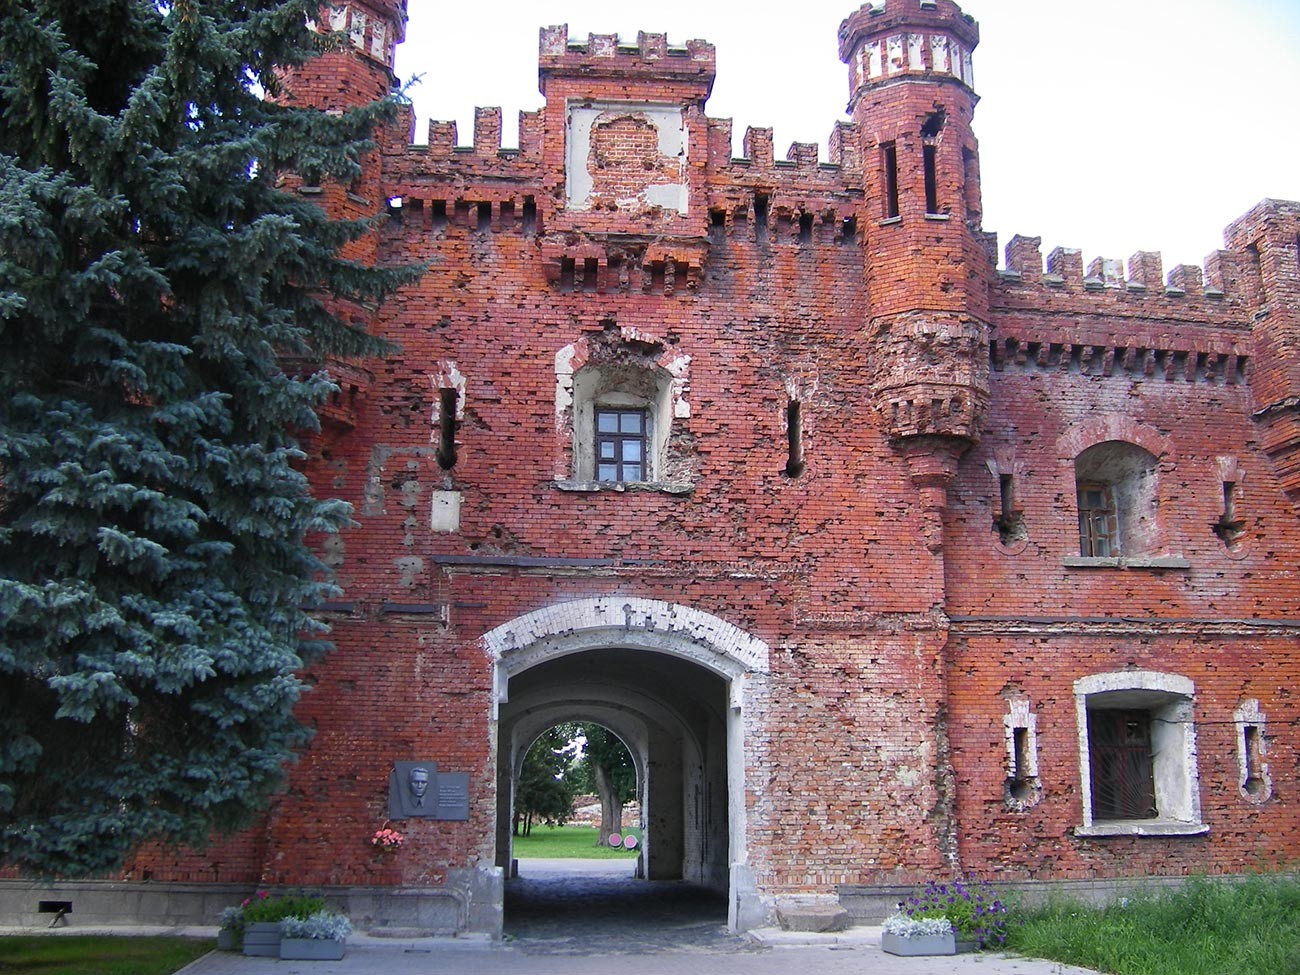 Brestovska tvrđava

